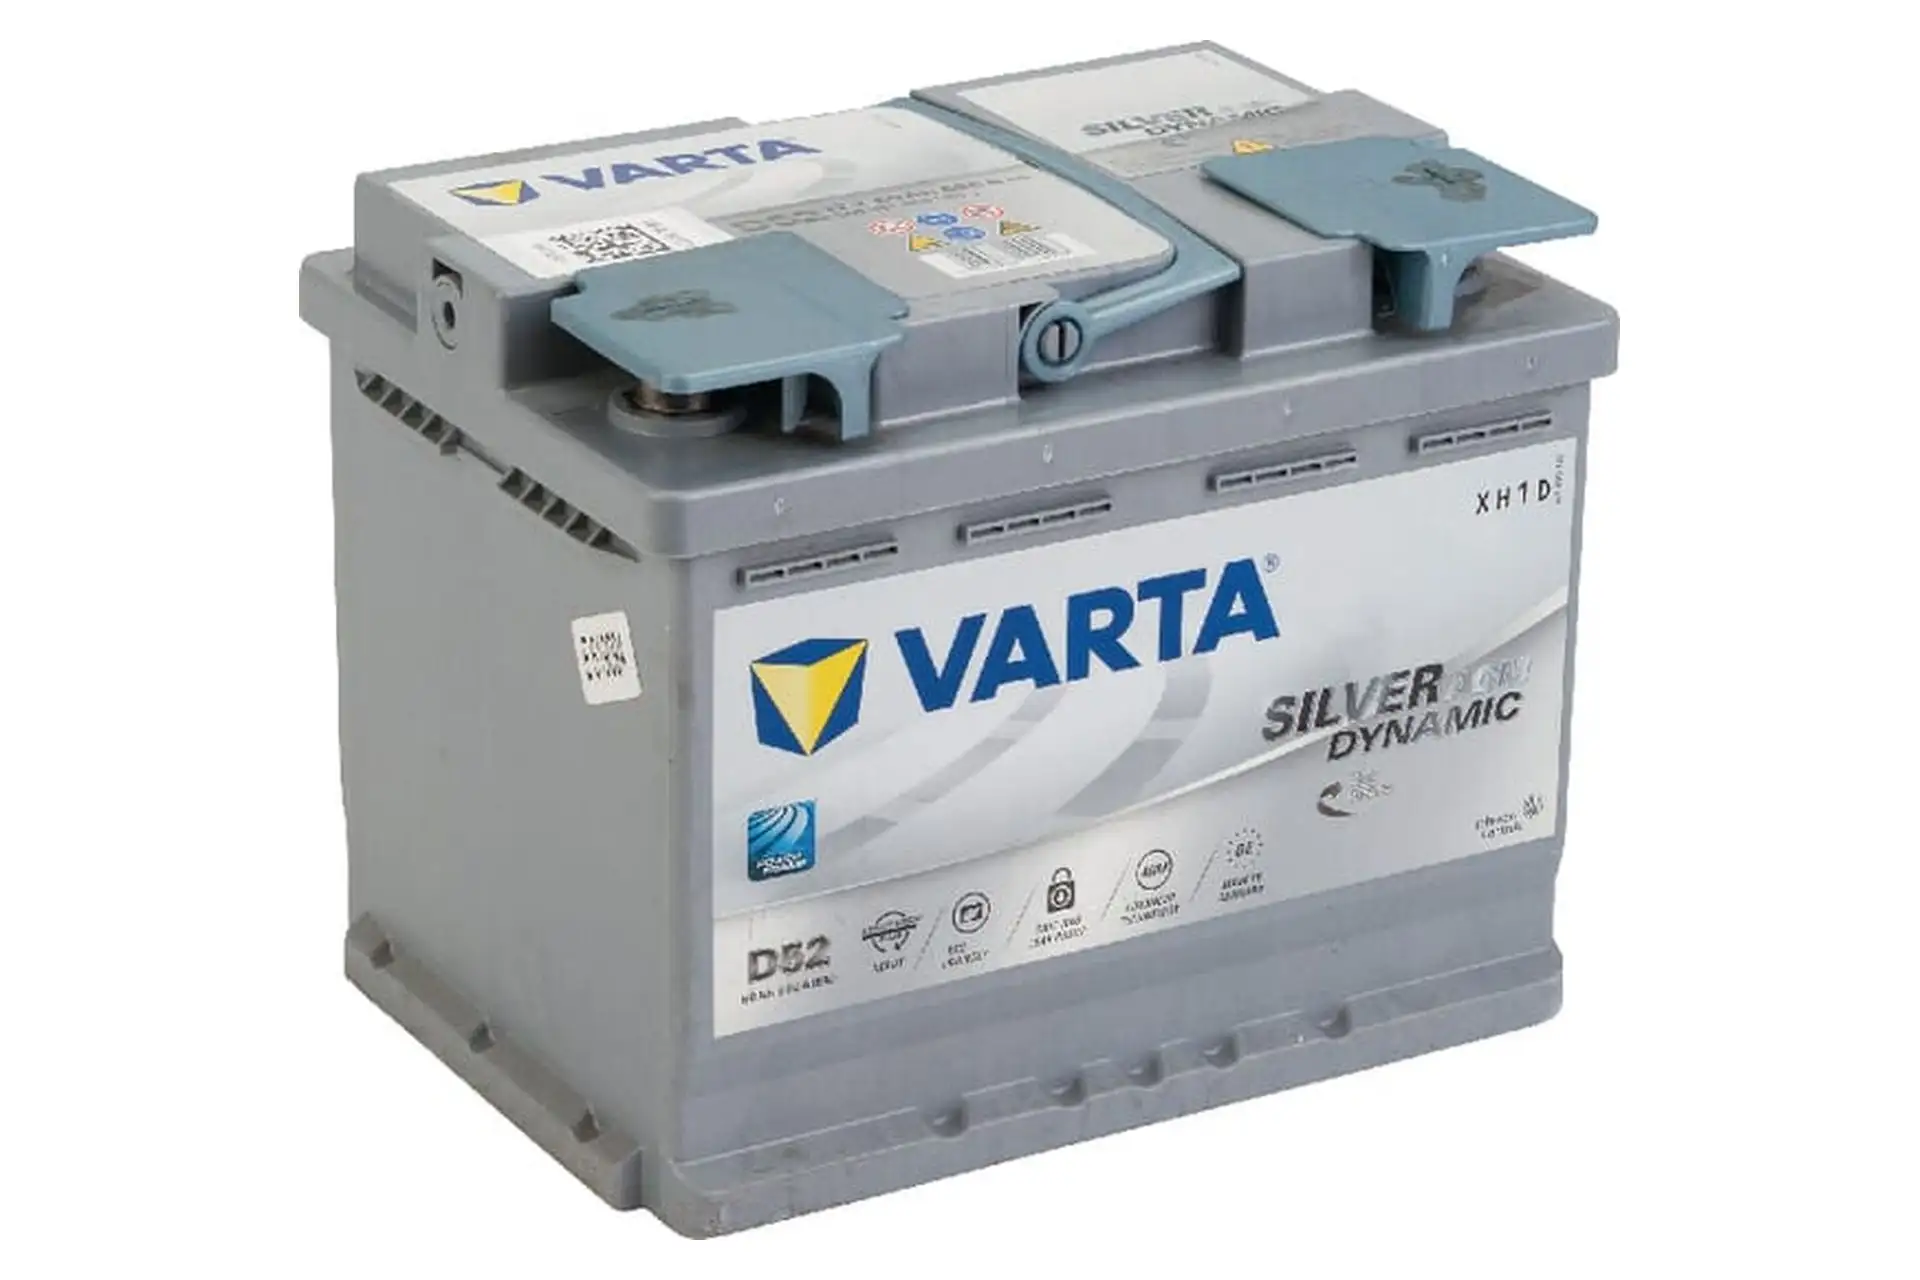 560901068D852 VARTA D52 SILVER dynamic D52 Batterie 12V 60Ah 680A B13 Batterie  AGM